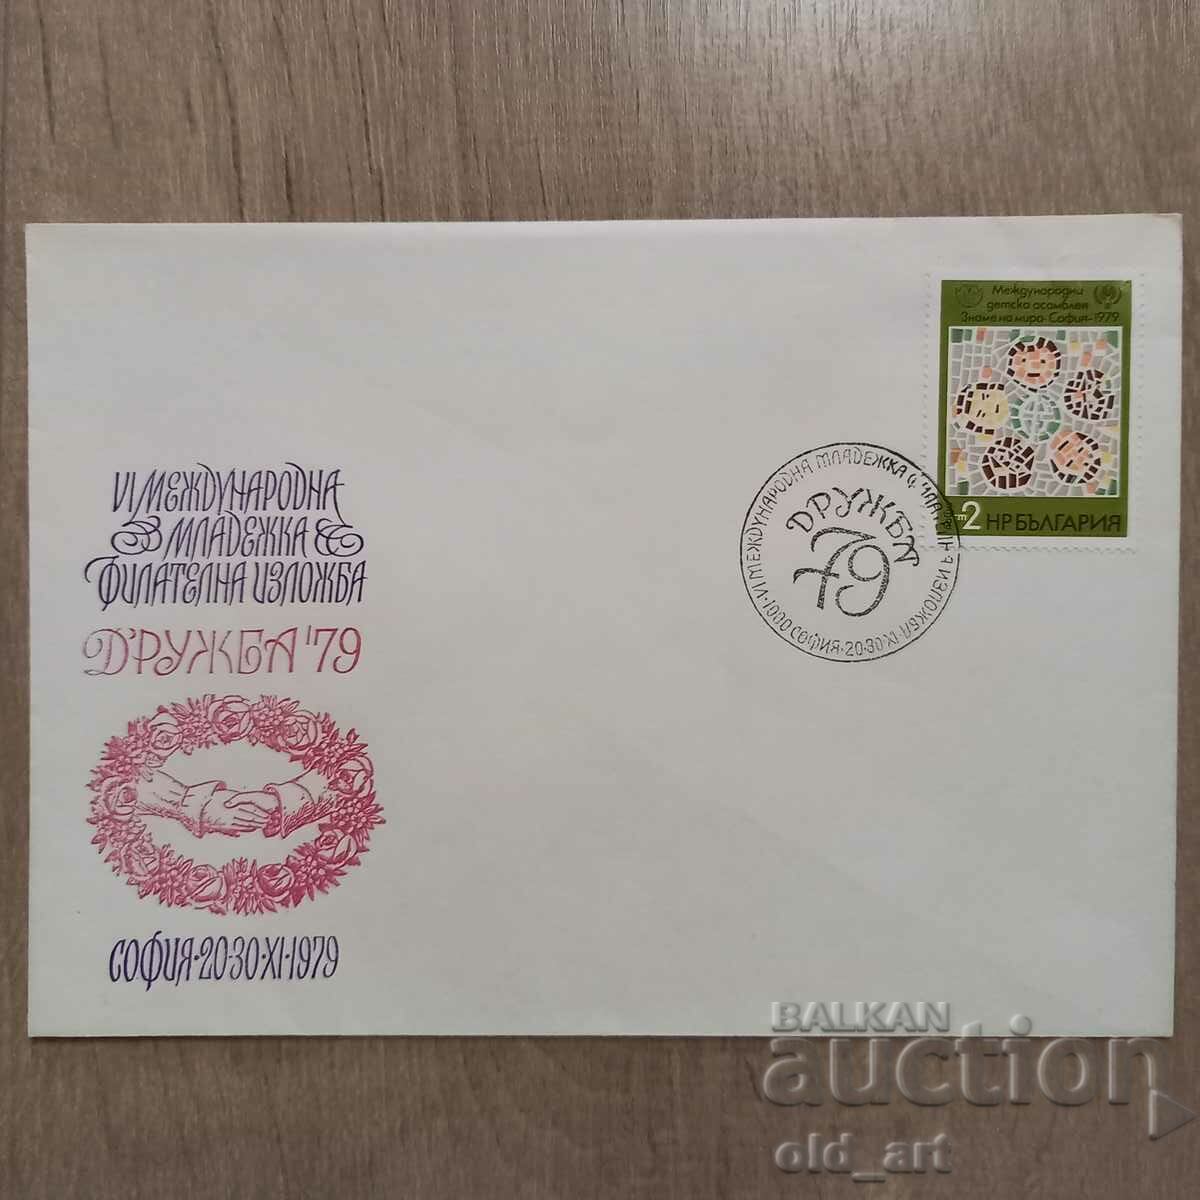 Plic postal - VI Int. file. expozitia Prietenie 79